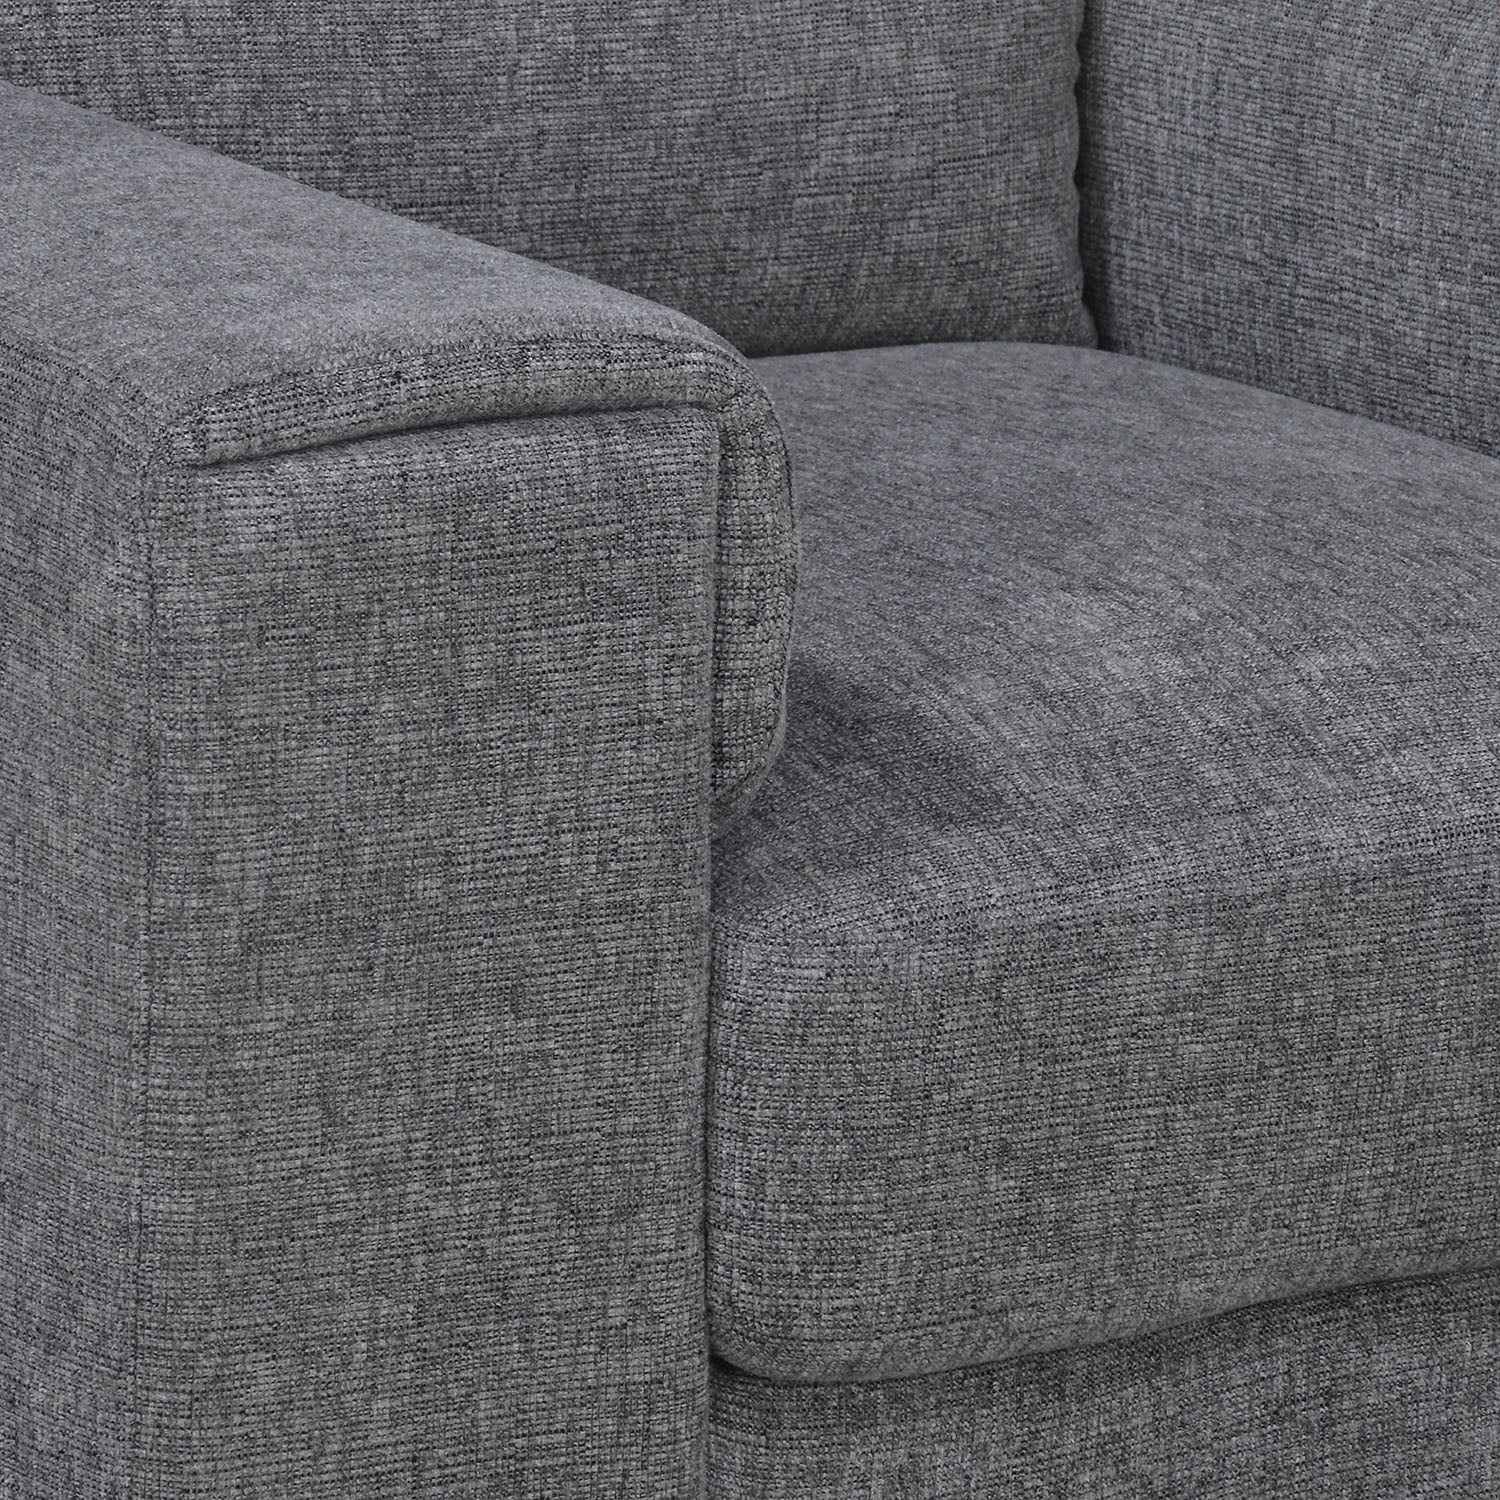 Leah 1 Seater Sofa (Grey)